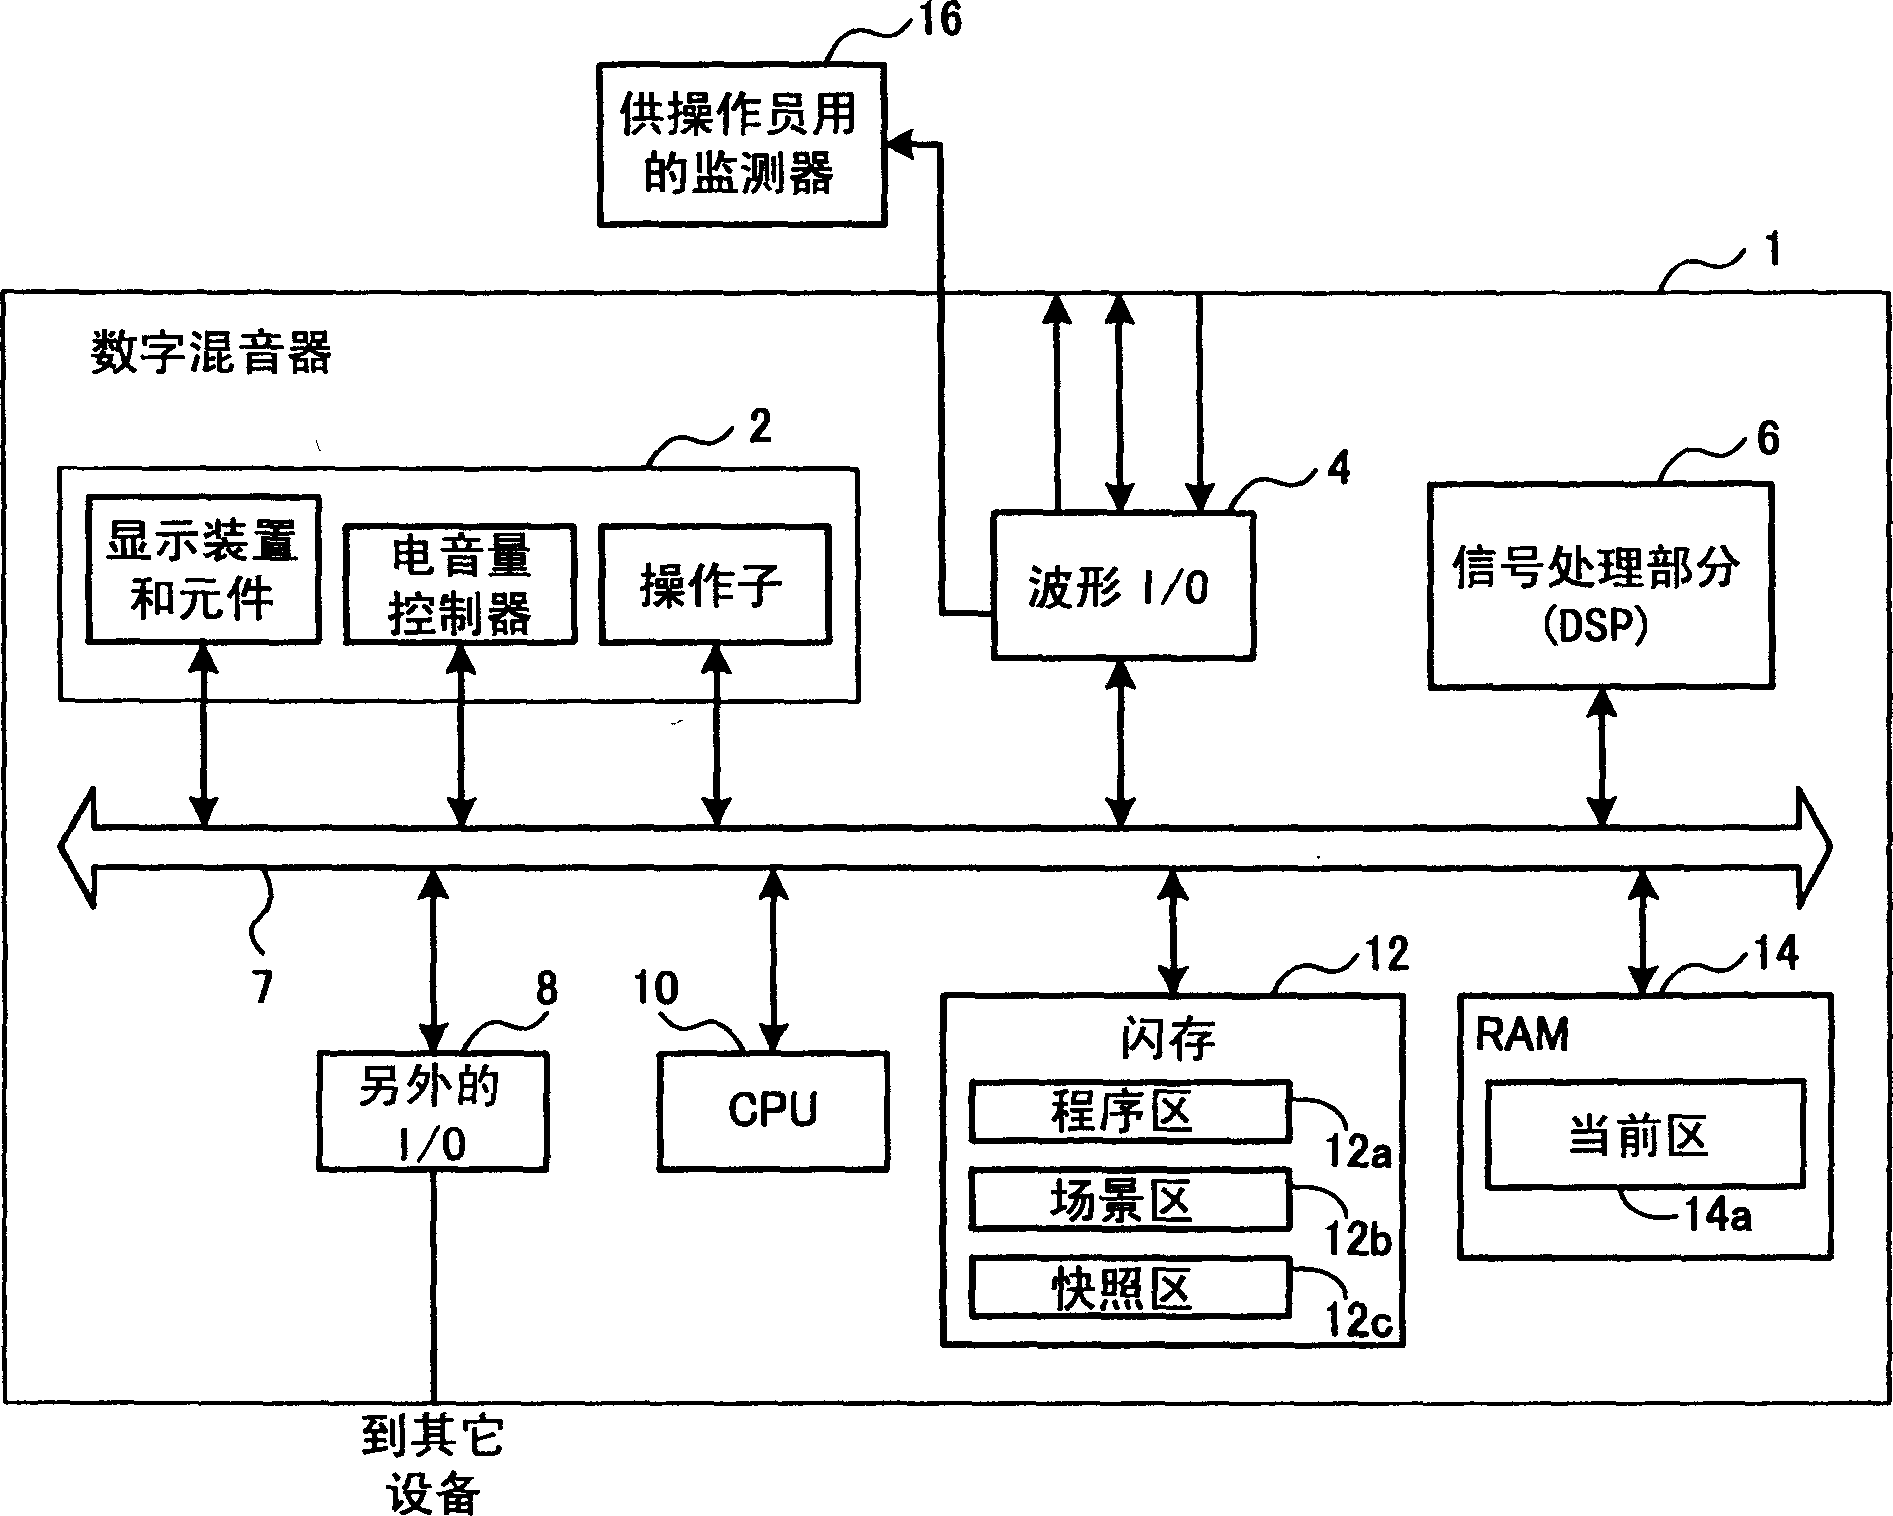 Audio mixer apparatus and parameter setting method for the apparatus